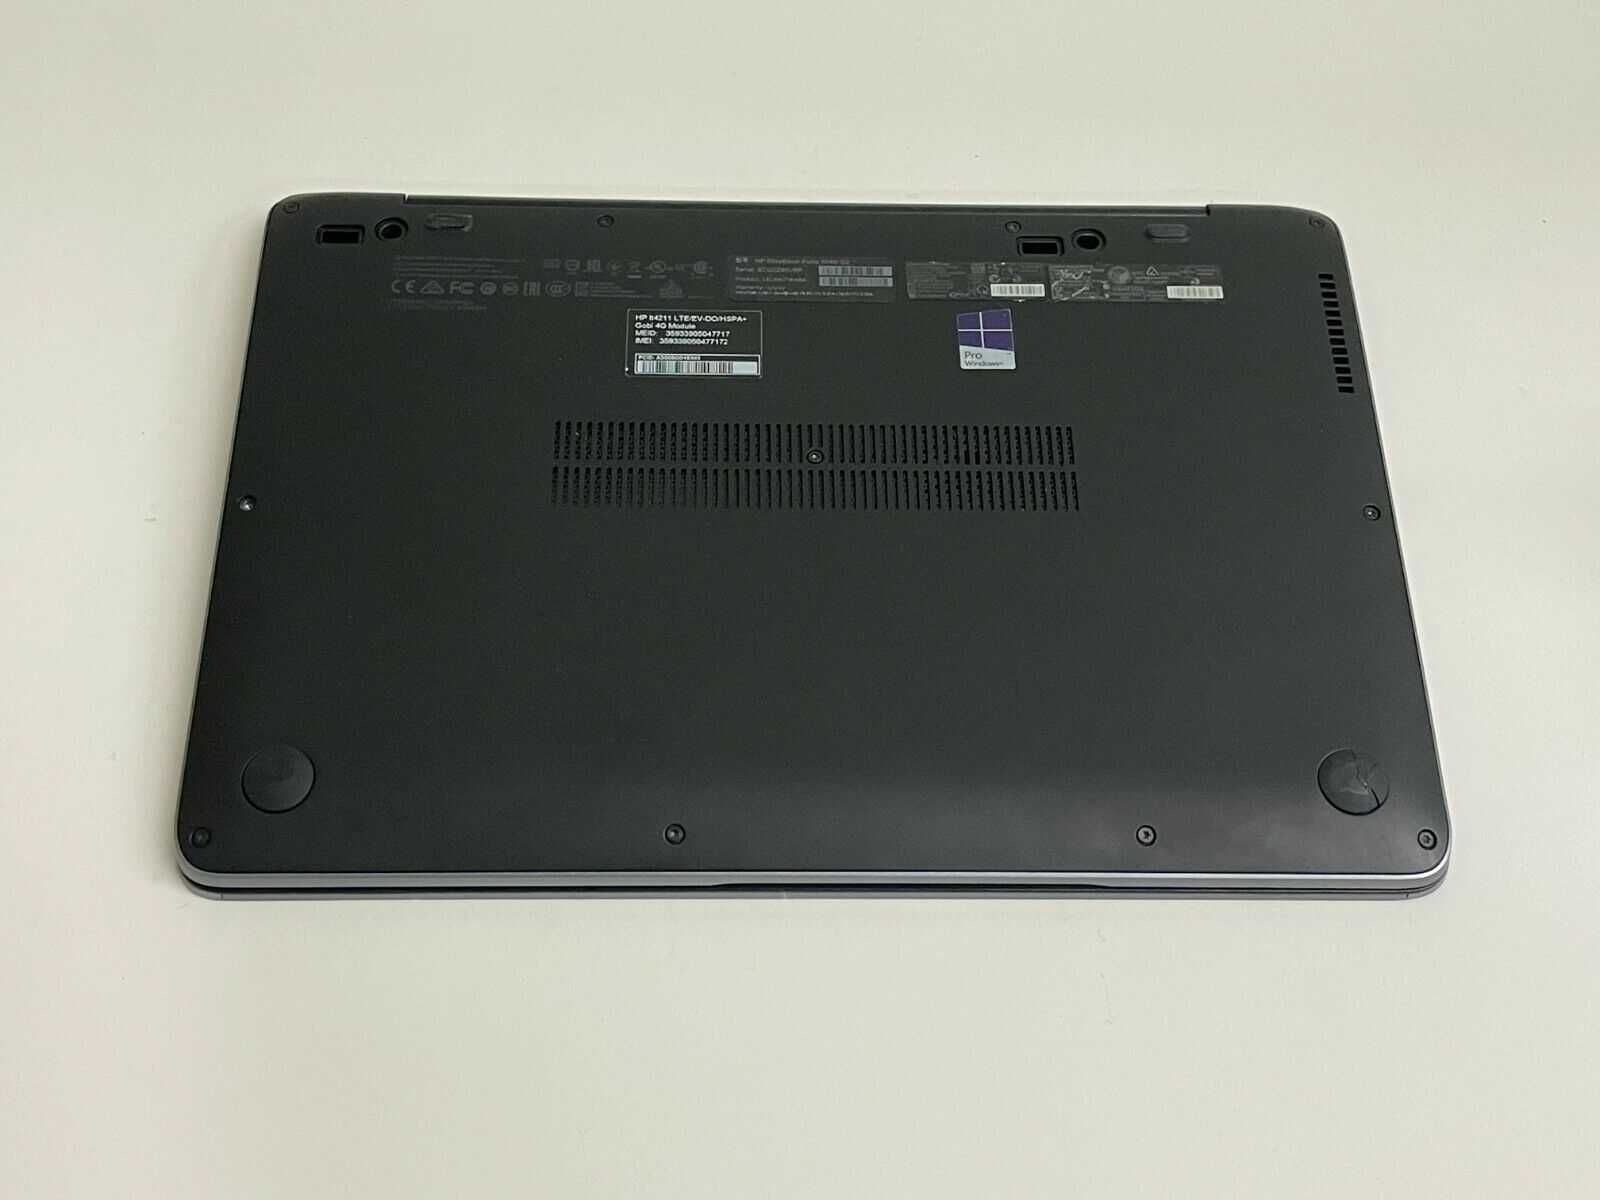 Лаптоп HP 1040 G1 I7-4650U 8GB 256GB SSD 14.0 FHD Windows 10